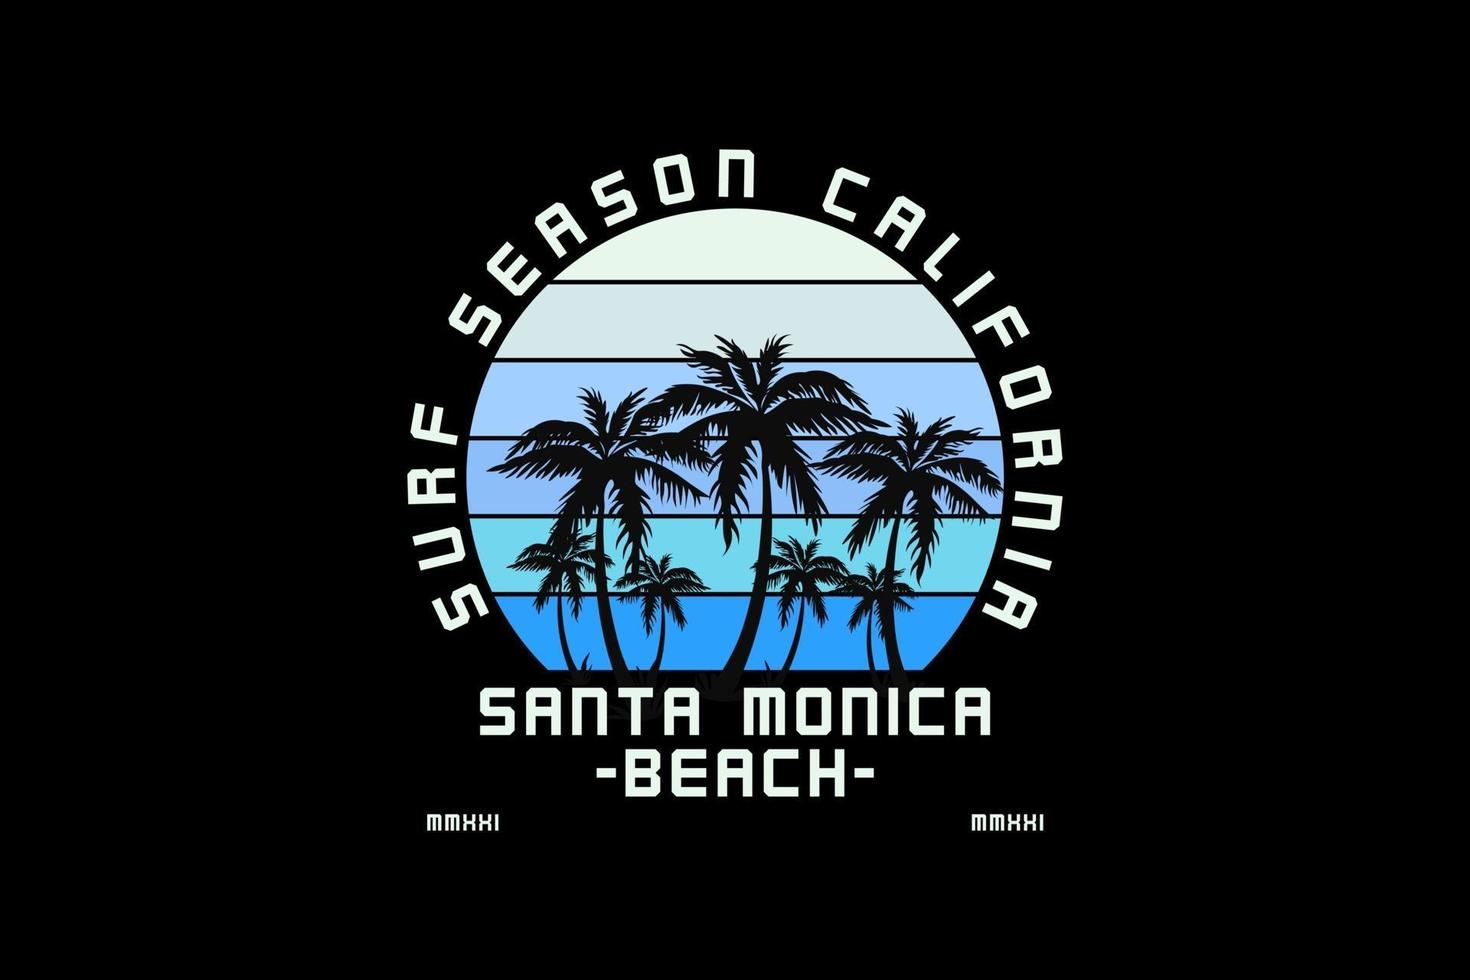 17.Surfsaison Kalifornien, Silhouette Retro-Vintage-Stil vektor